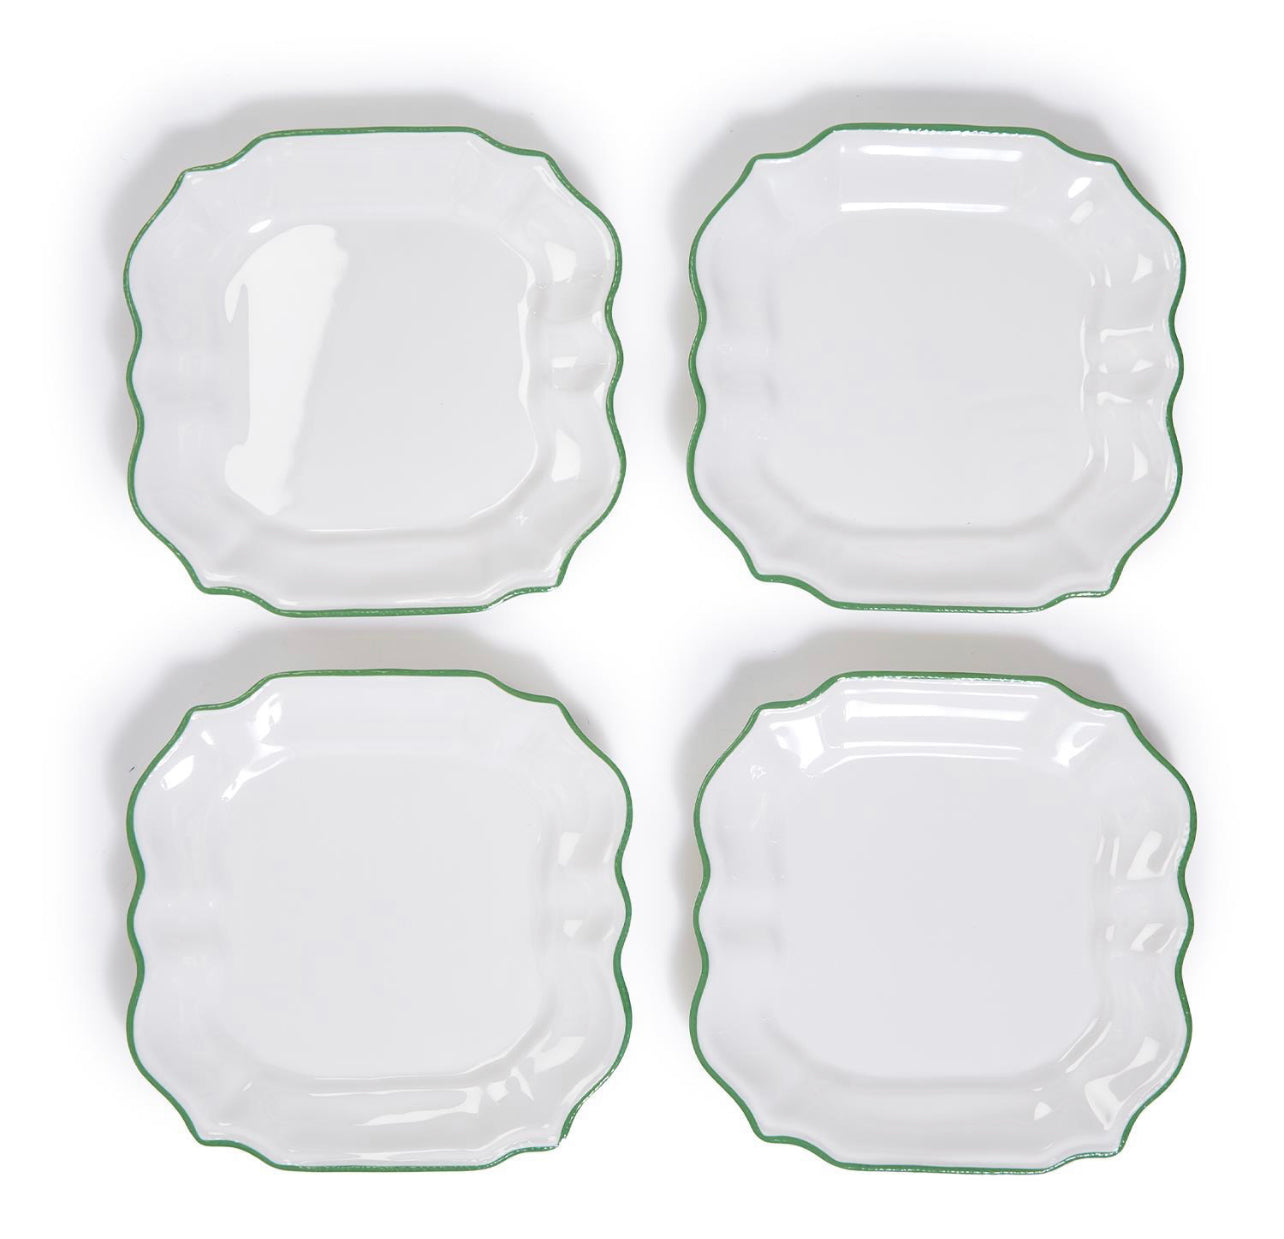 Garden Soiree Set of 4 Dinner Plates with Green Border